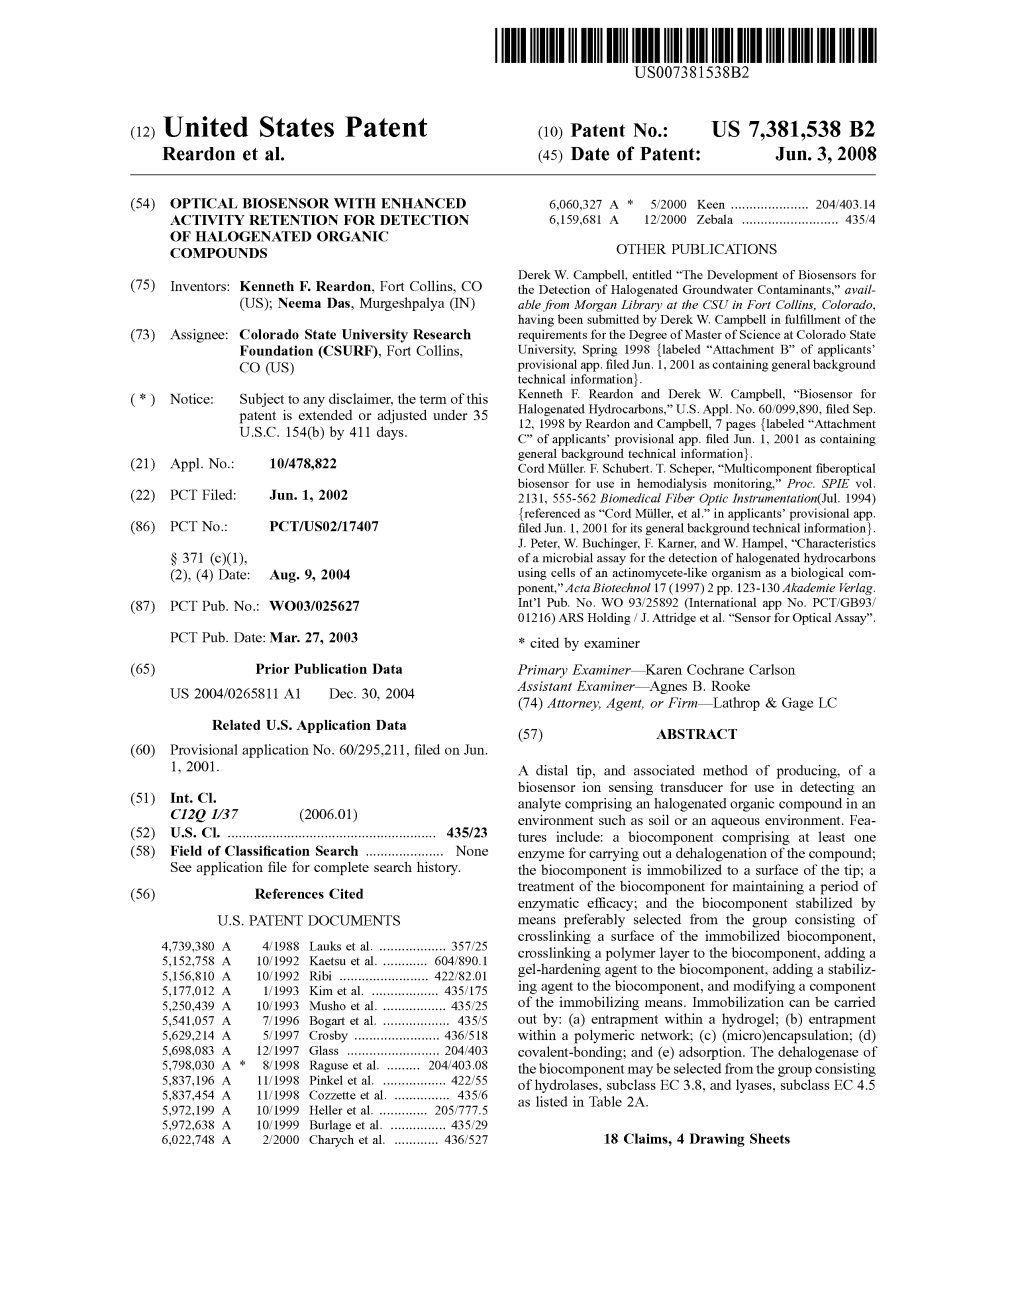 (12) United States Patent (10) Patent No.: US 7,381,538 B2 Reardon Et Al